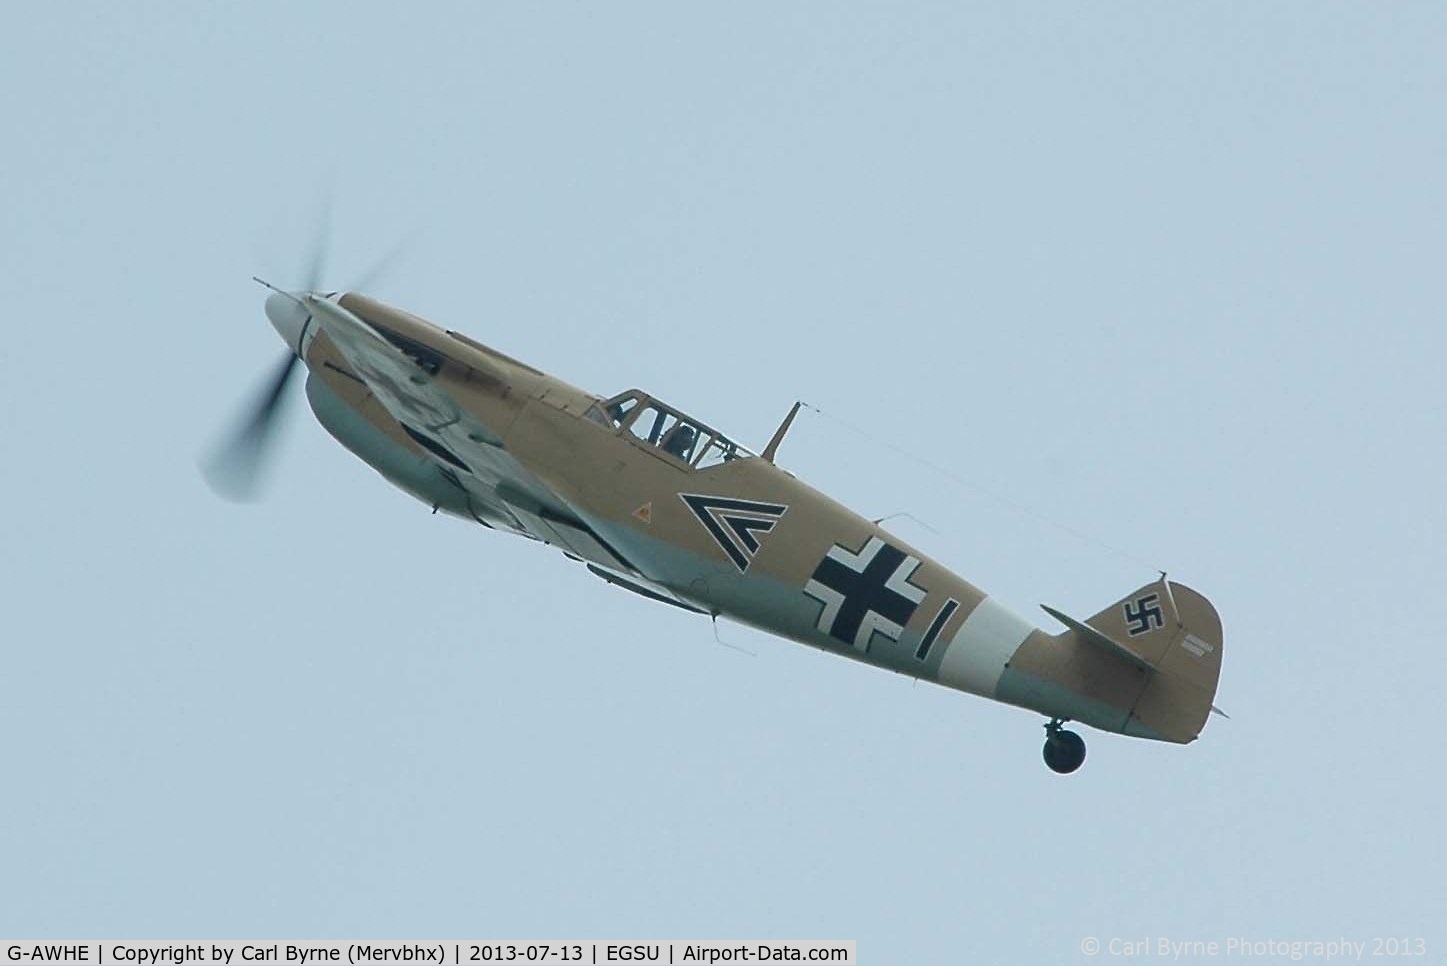 G-AWHE, Hispano HA-1112-M1L Buchon C/N 64, Flying as part of the 